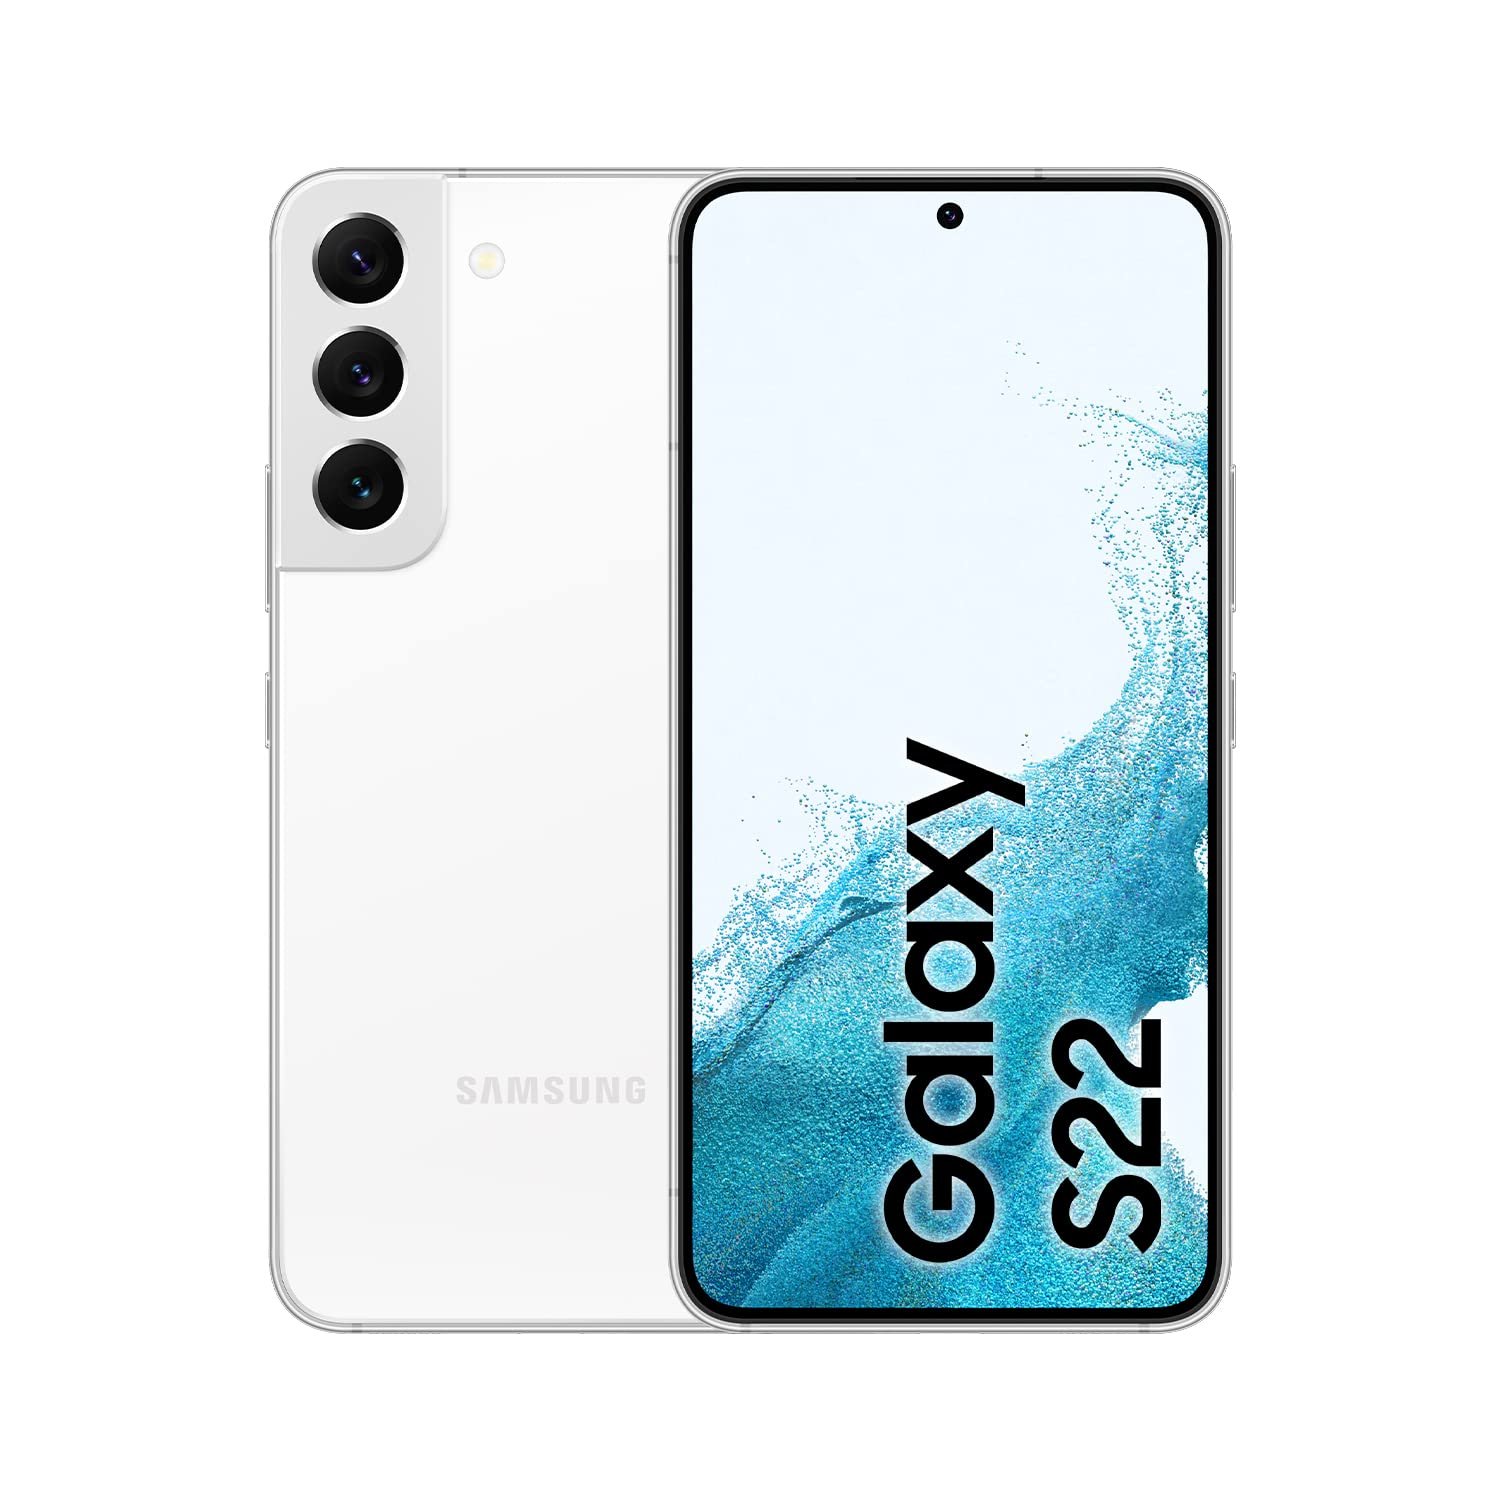 Samsung Galaxy S22 Specs & Price